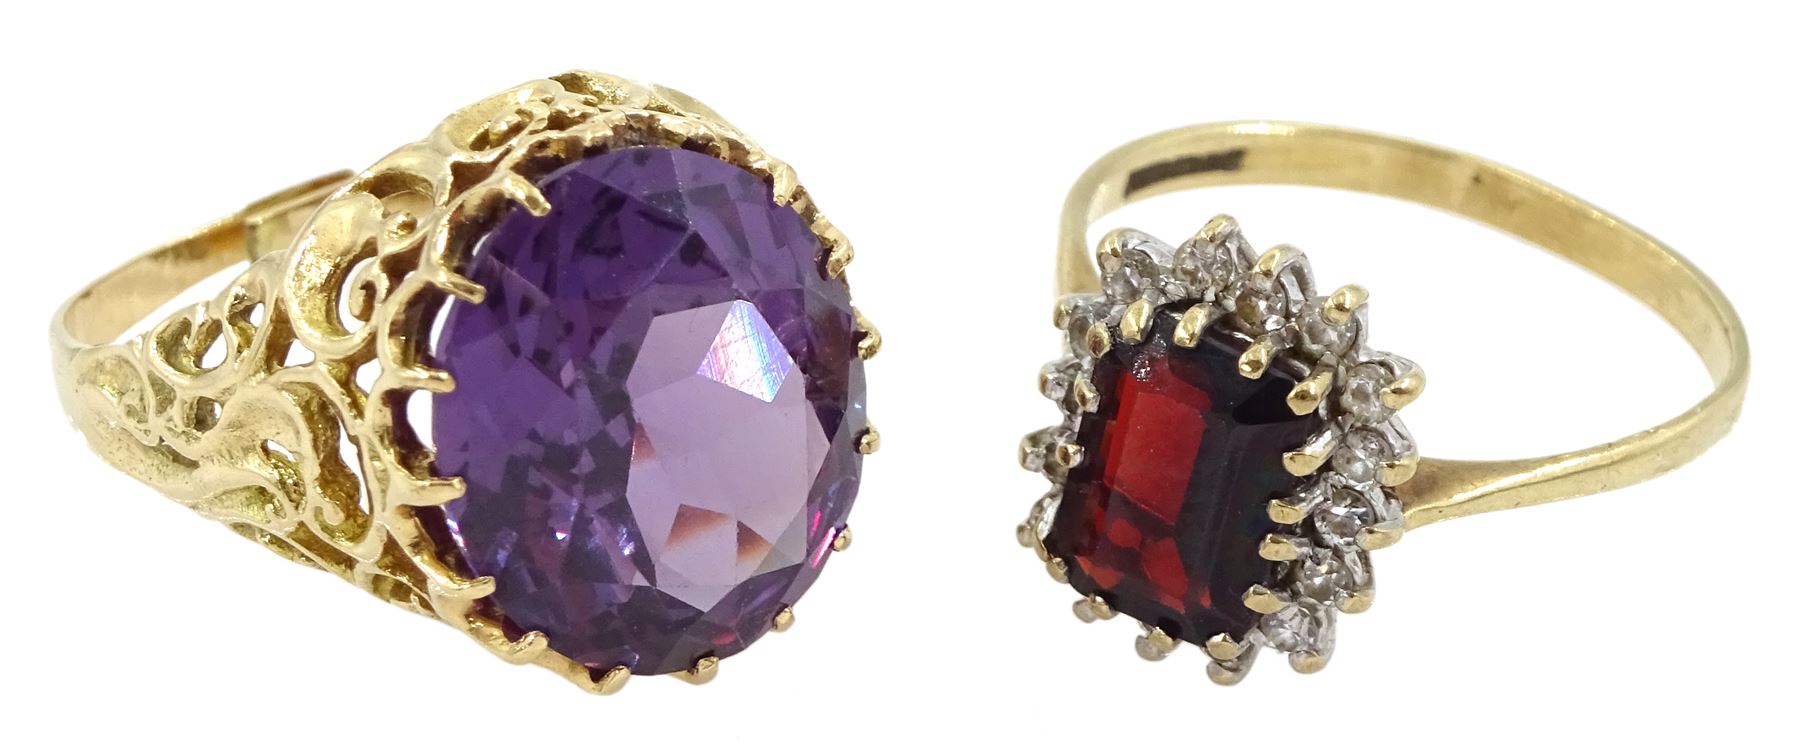 14ct gold purple stone set ring